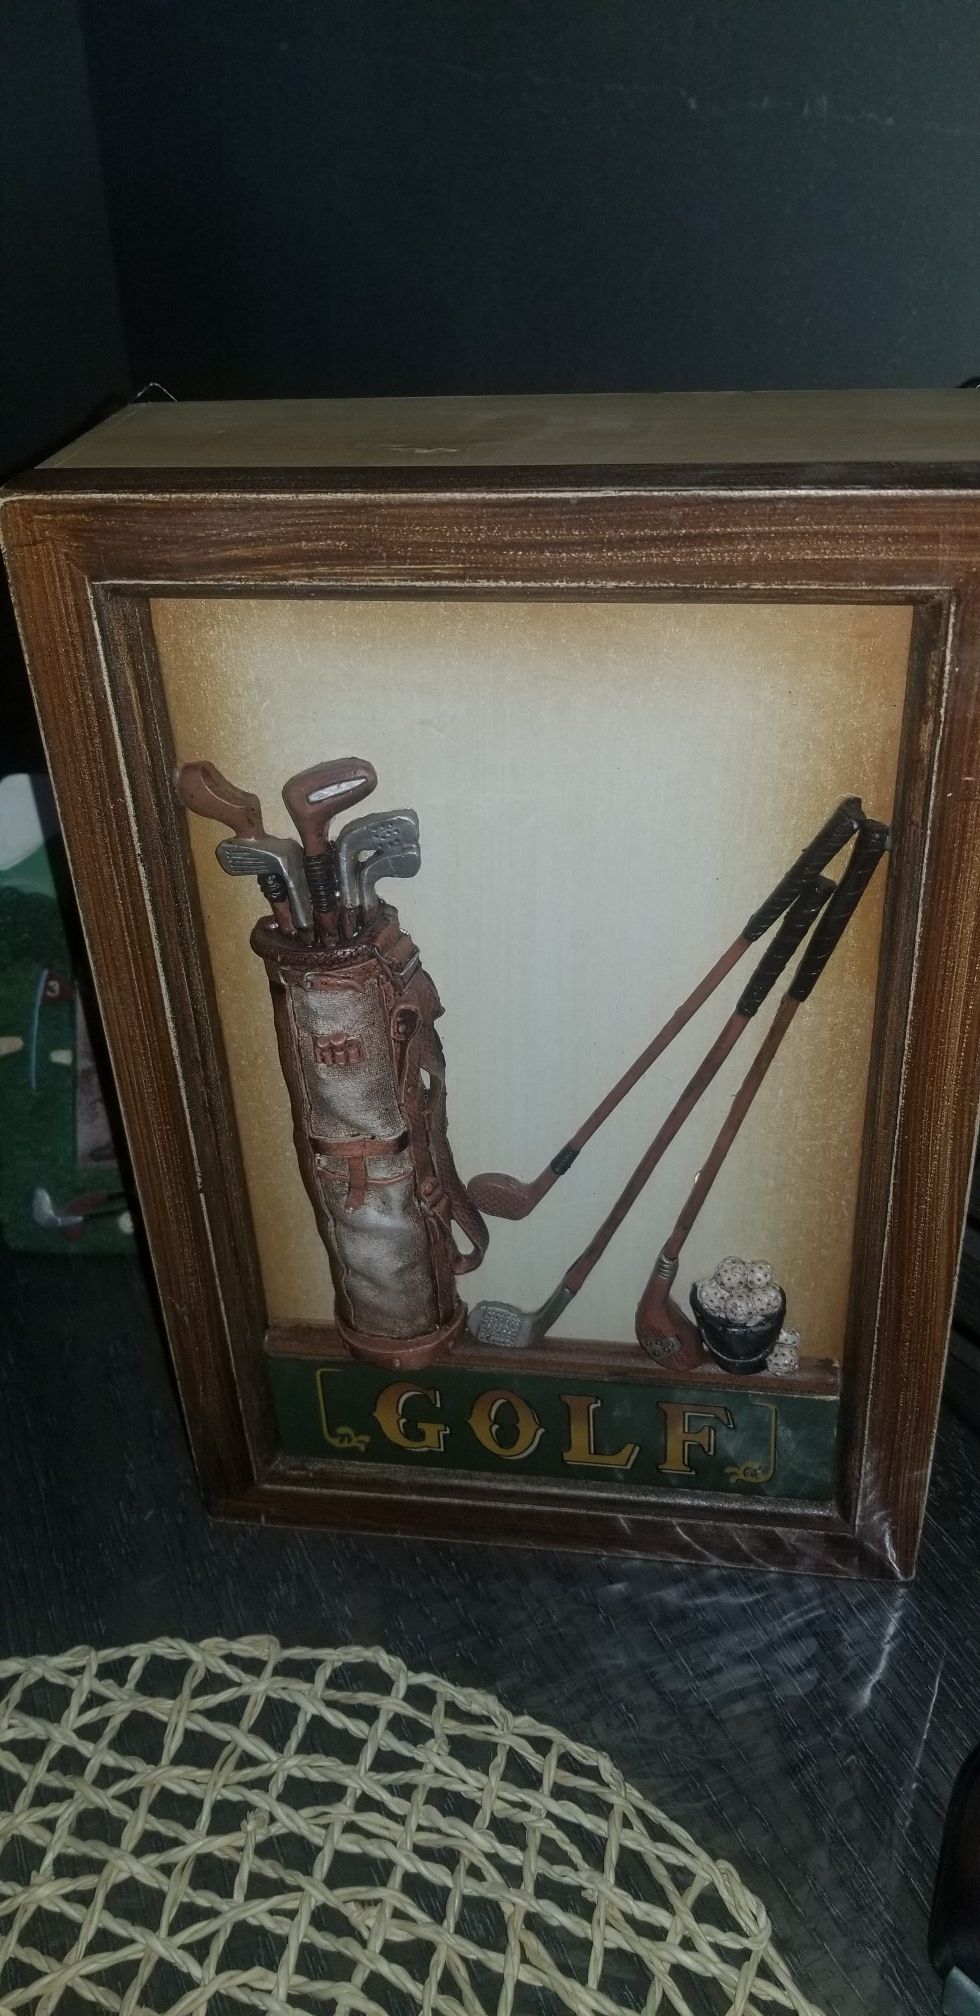 Golf aficionado key holder